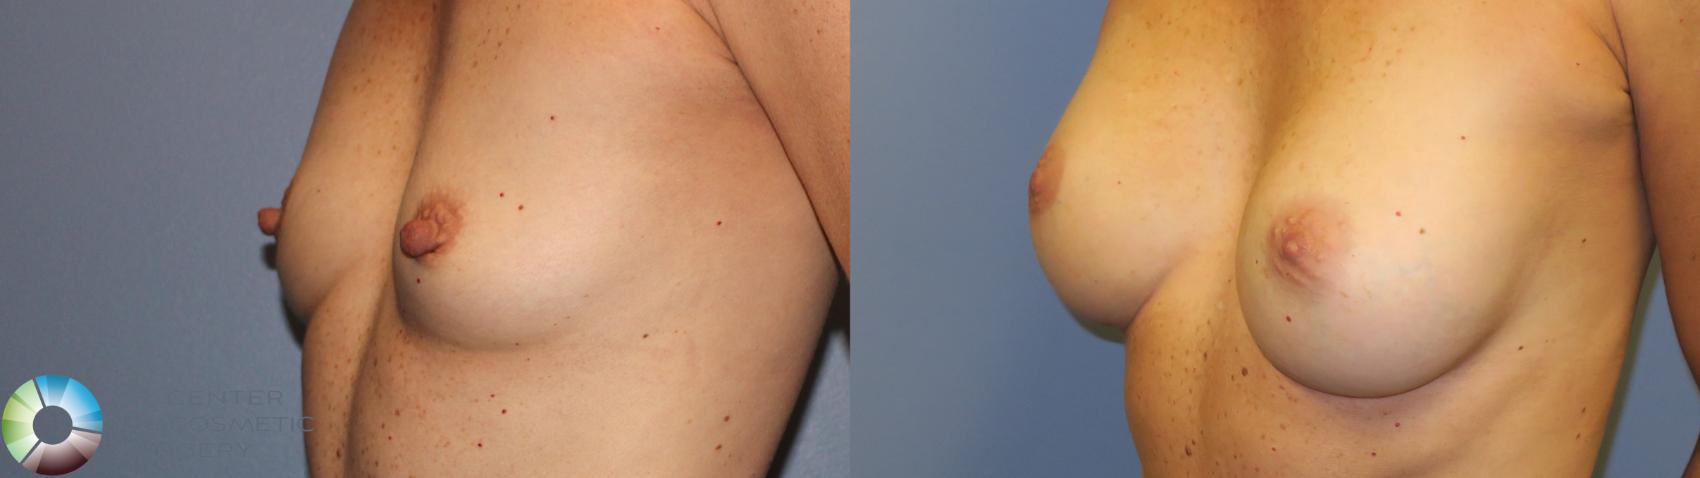 Before & After Nipple reduction Case 11216 Left Oblique View in Denver & Golden, CO